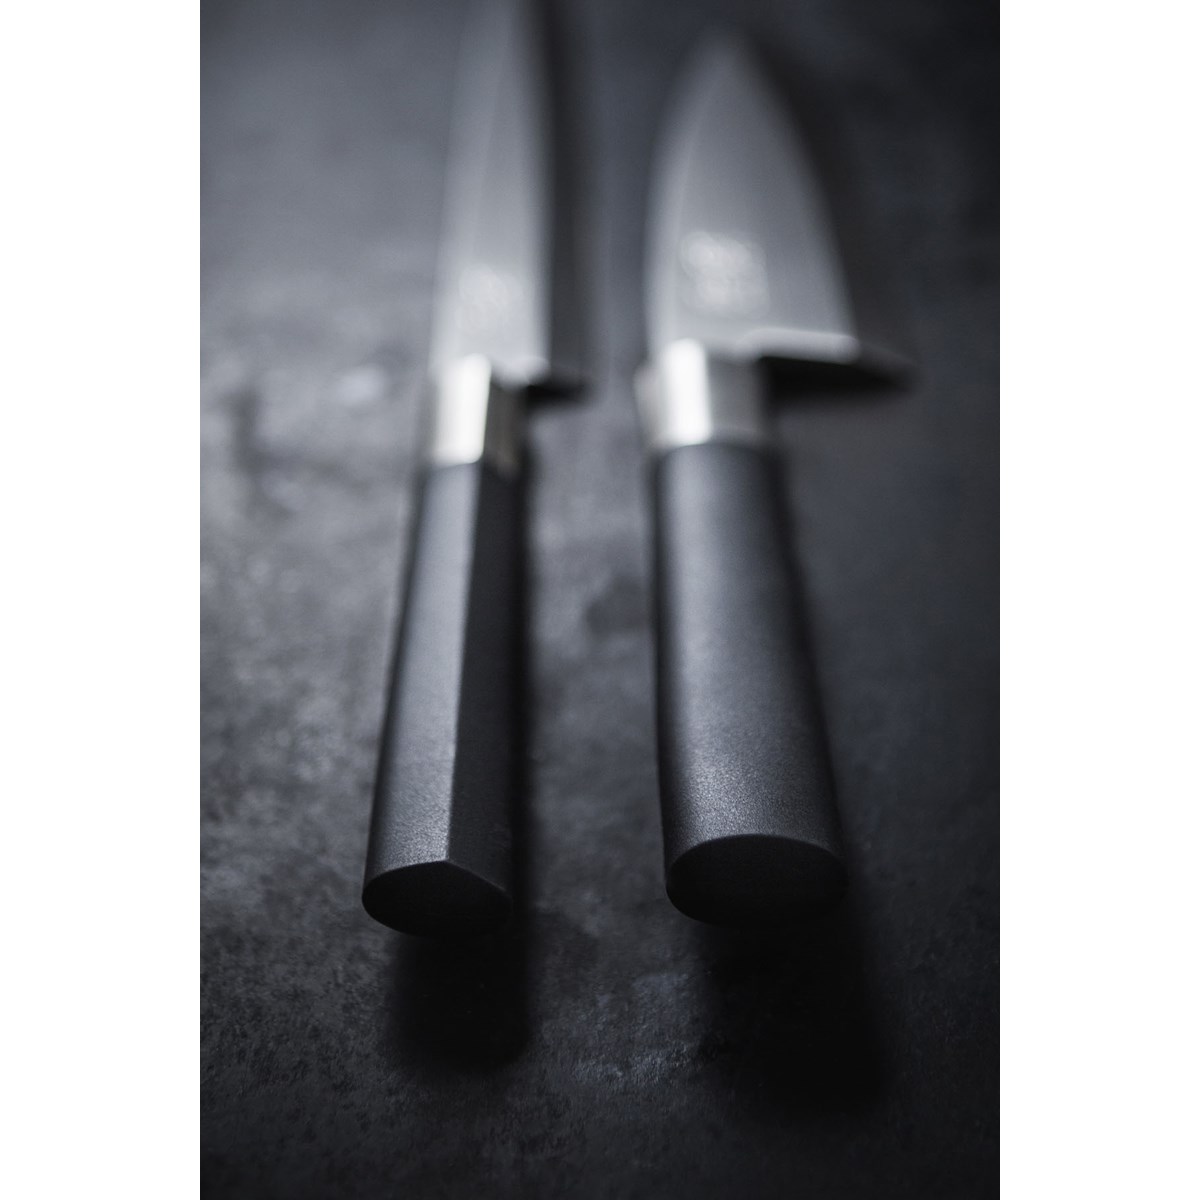 KAI, Wasabi Black universalkniv 15cm